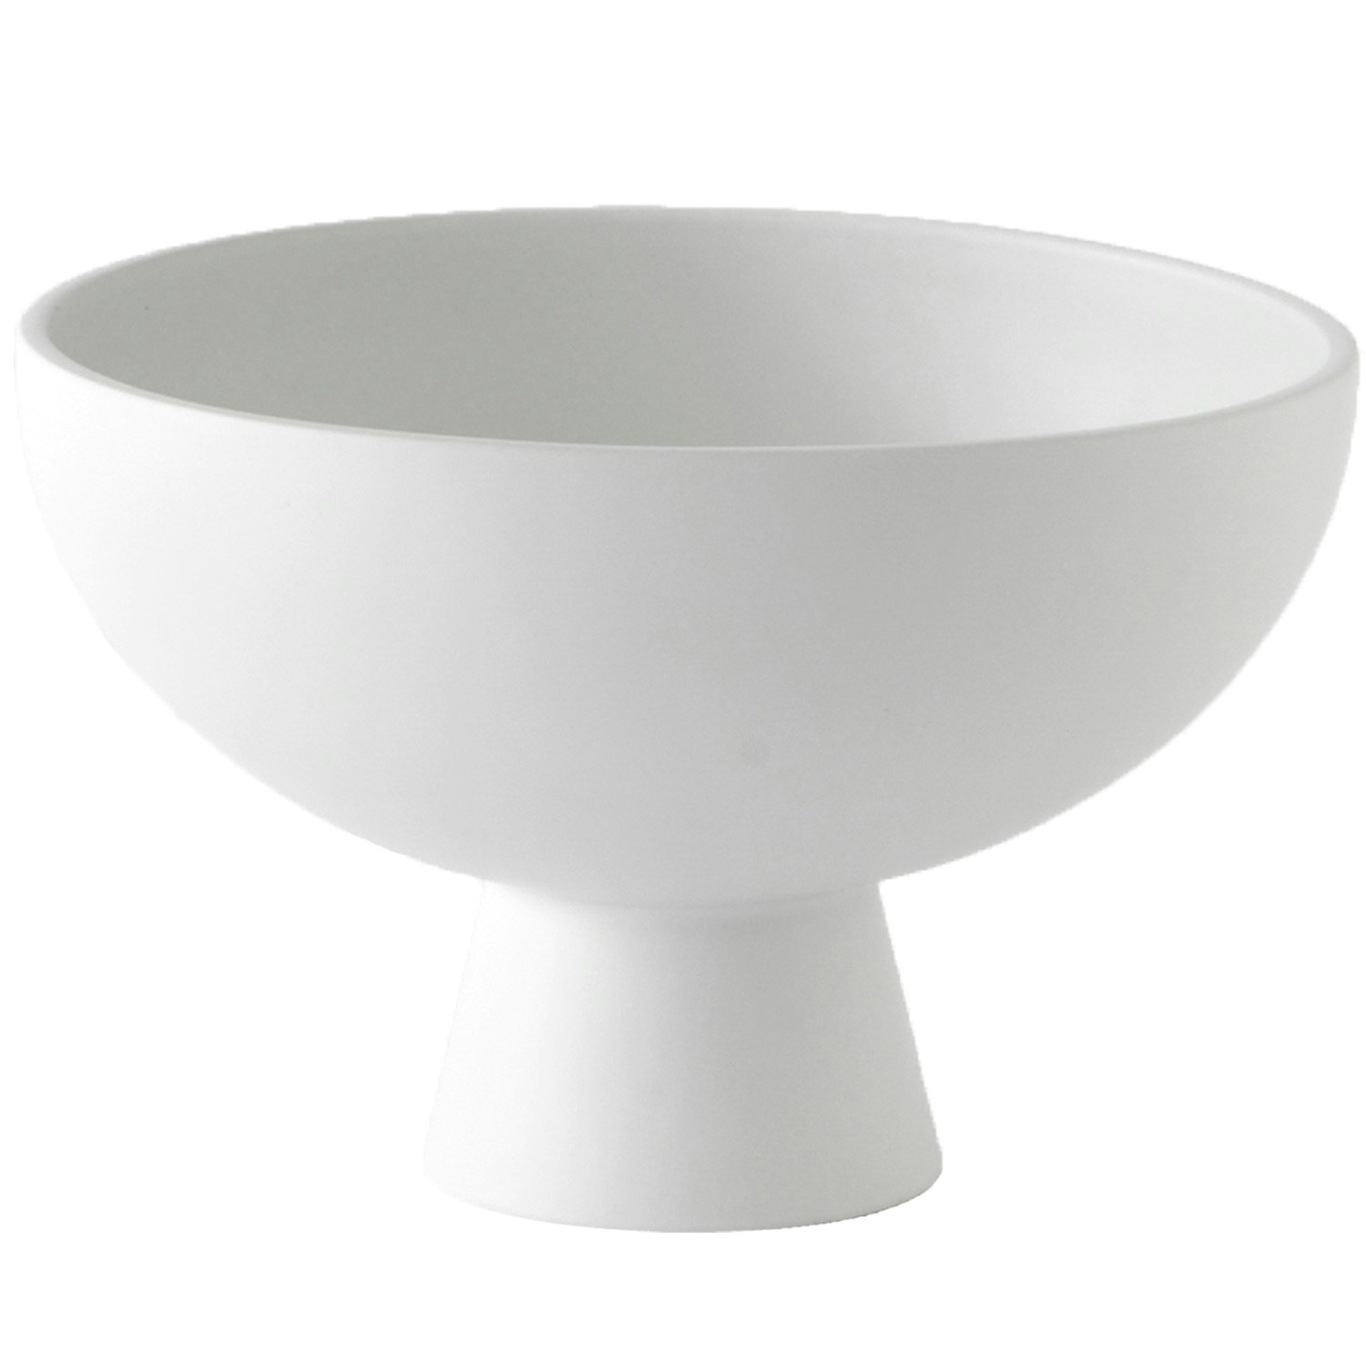 Strøm Bowl With Foot Ø19 cm, Vaporous Grey